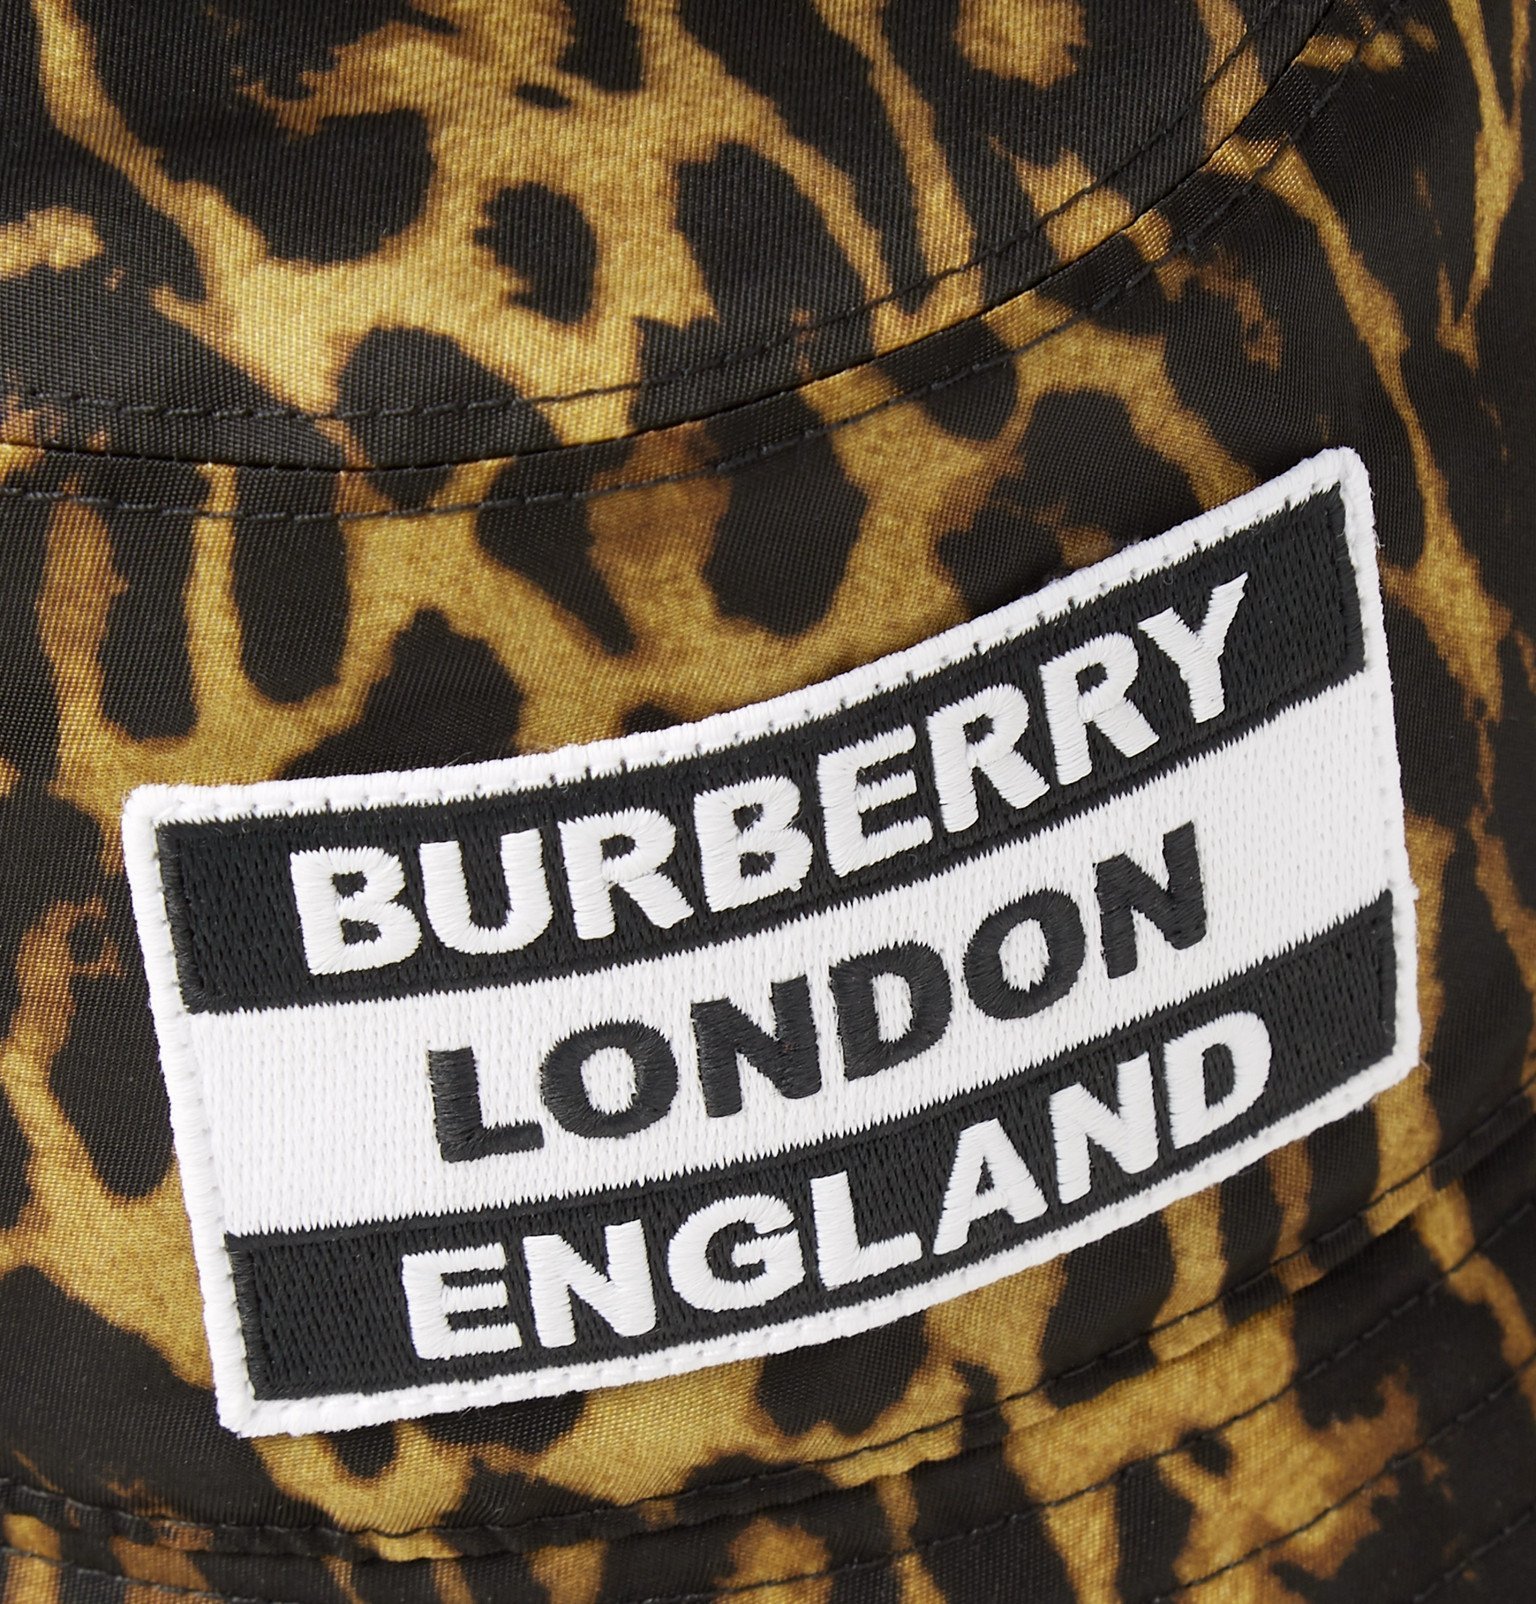 Burberry - Reversible Logo-Appliquéd Leopard-Print Nylon Bucket Hat - Animal  print Burberry